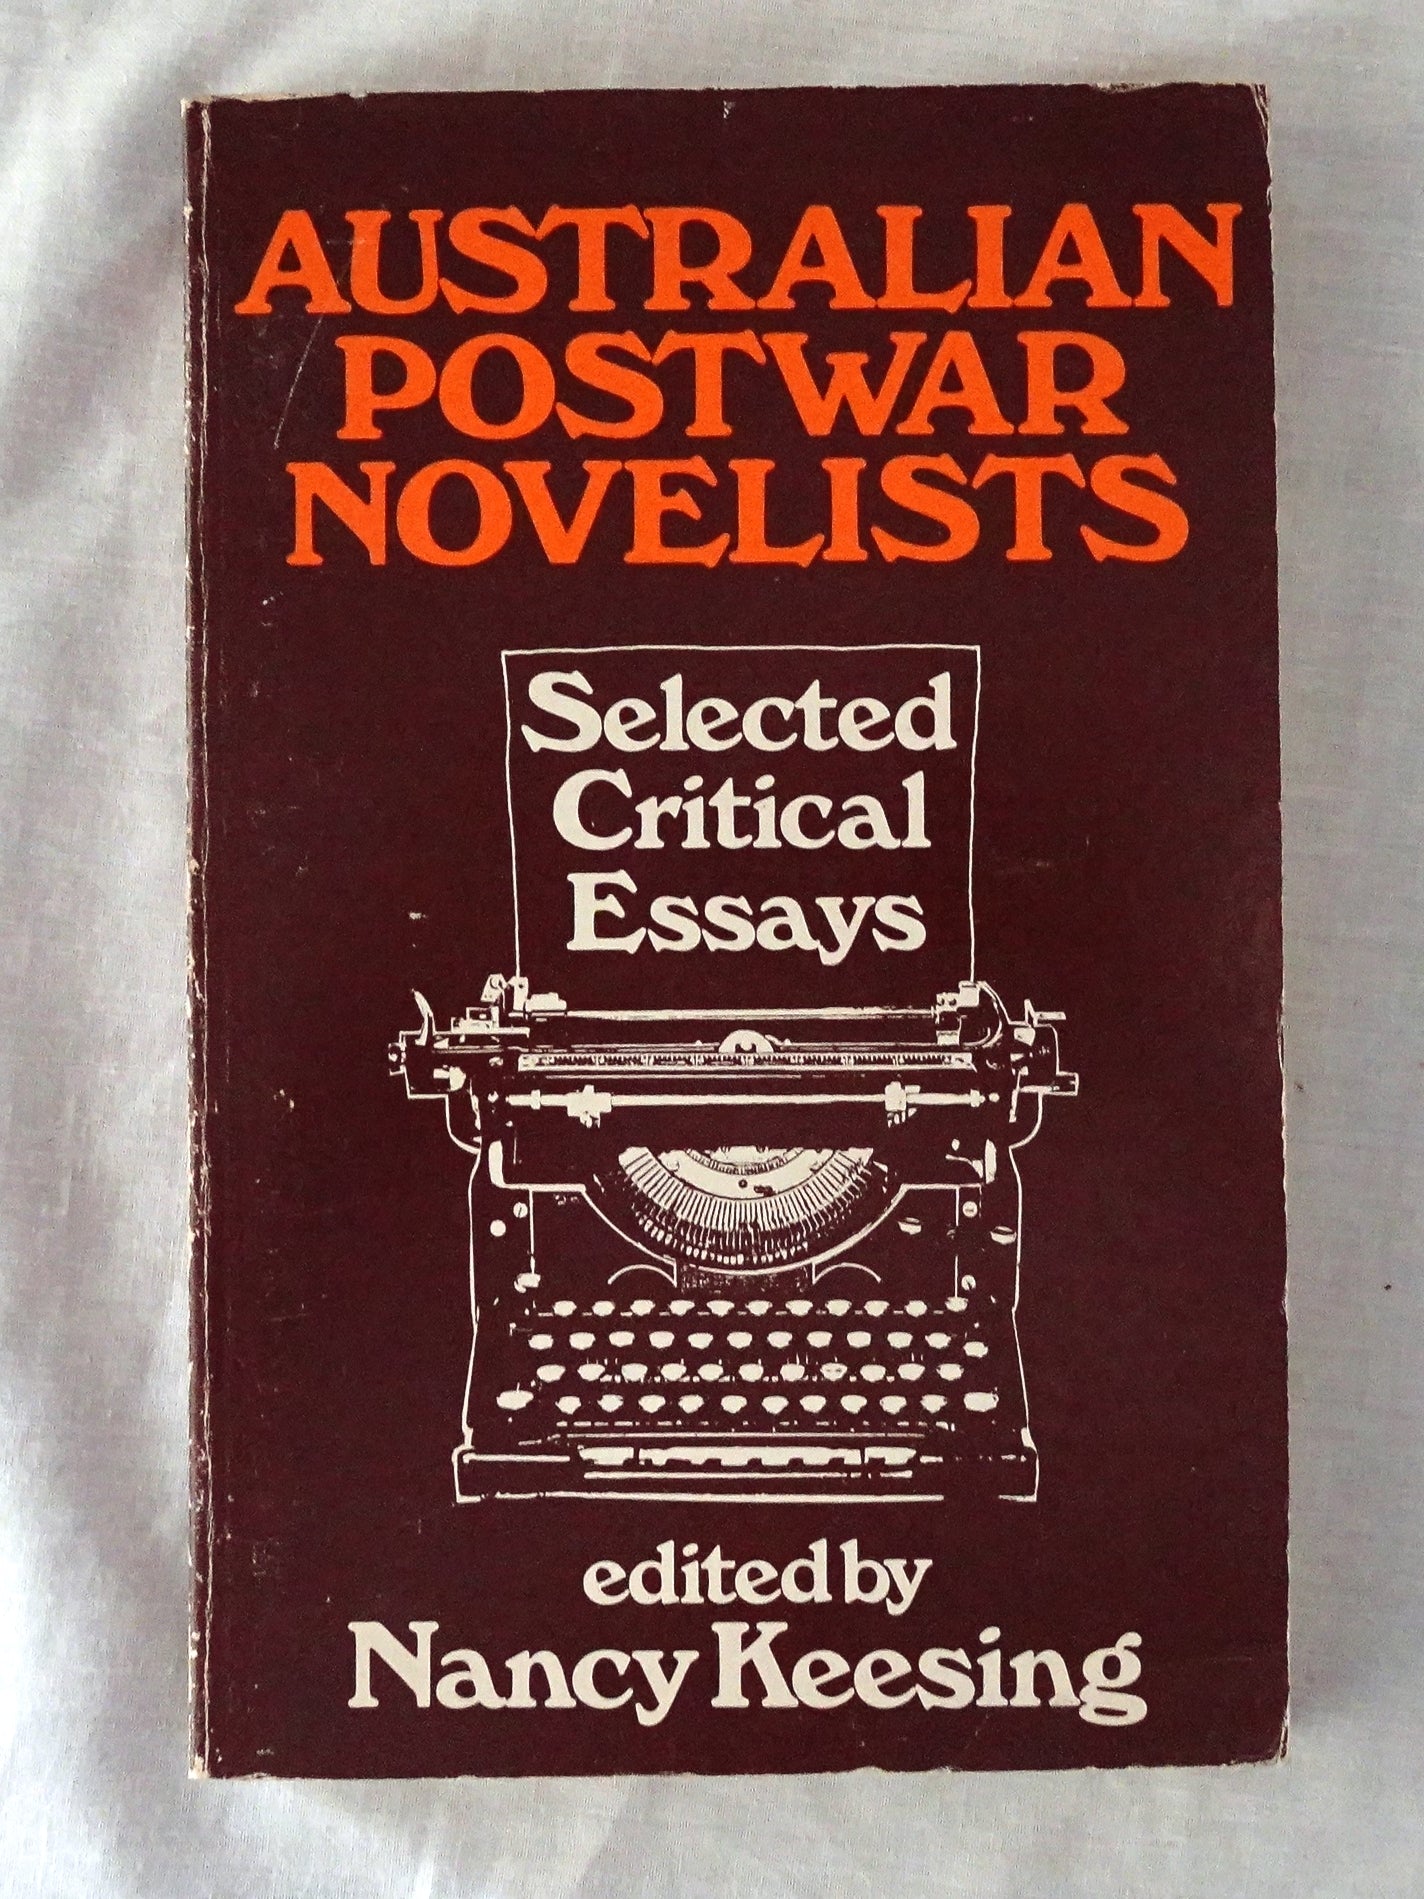 Australian Postwar Novelists  Selected Critical Essays  Edited by Nancy Keesing